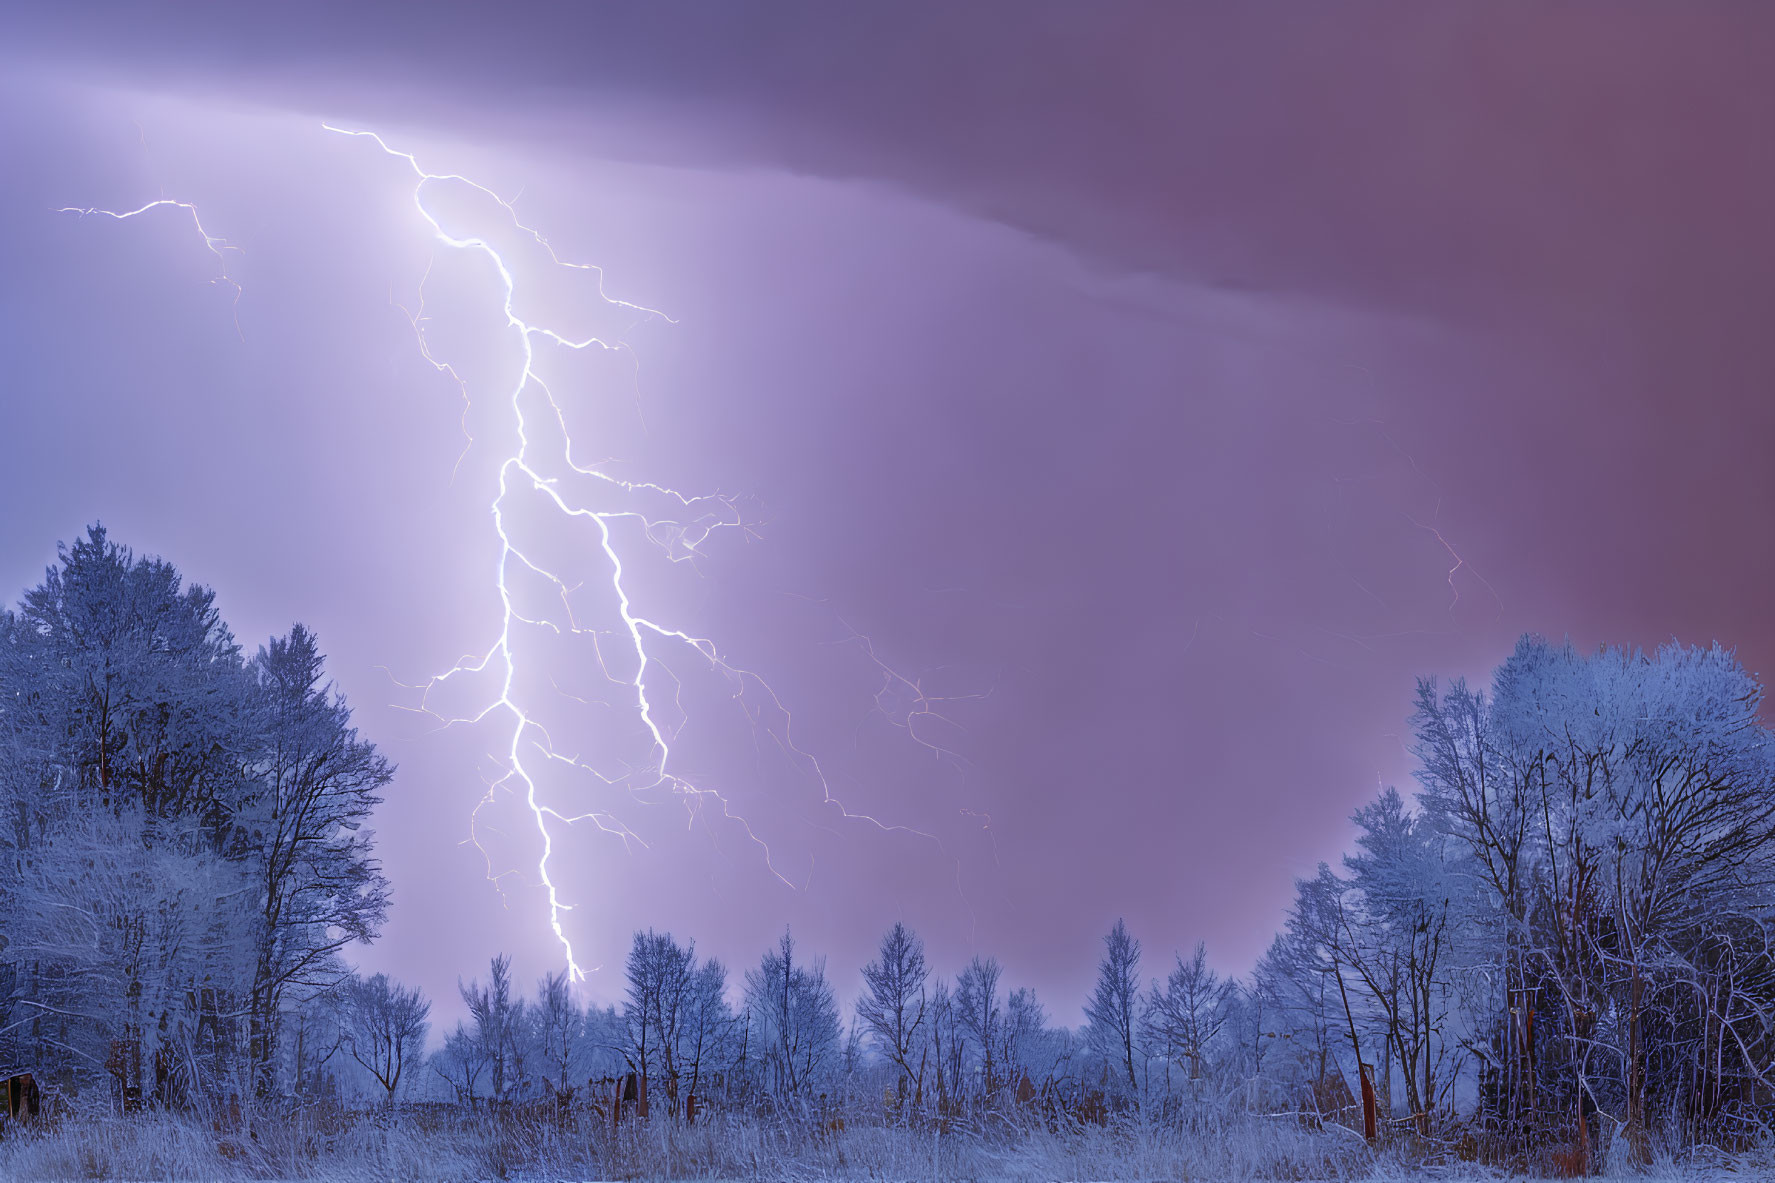 Wintry forest illuminated by dramatic lightning strike